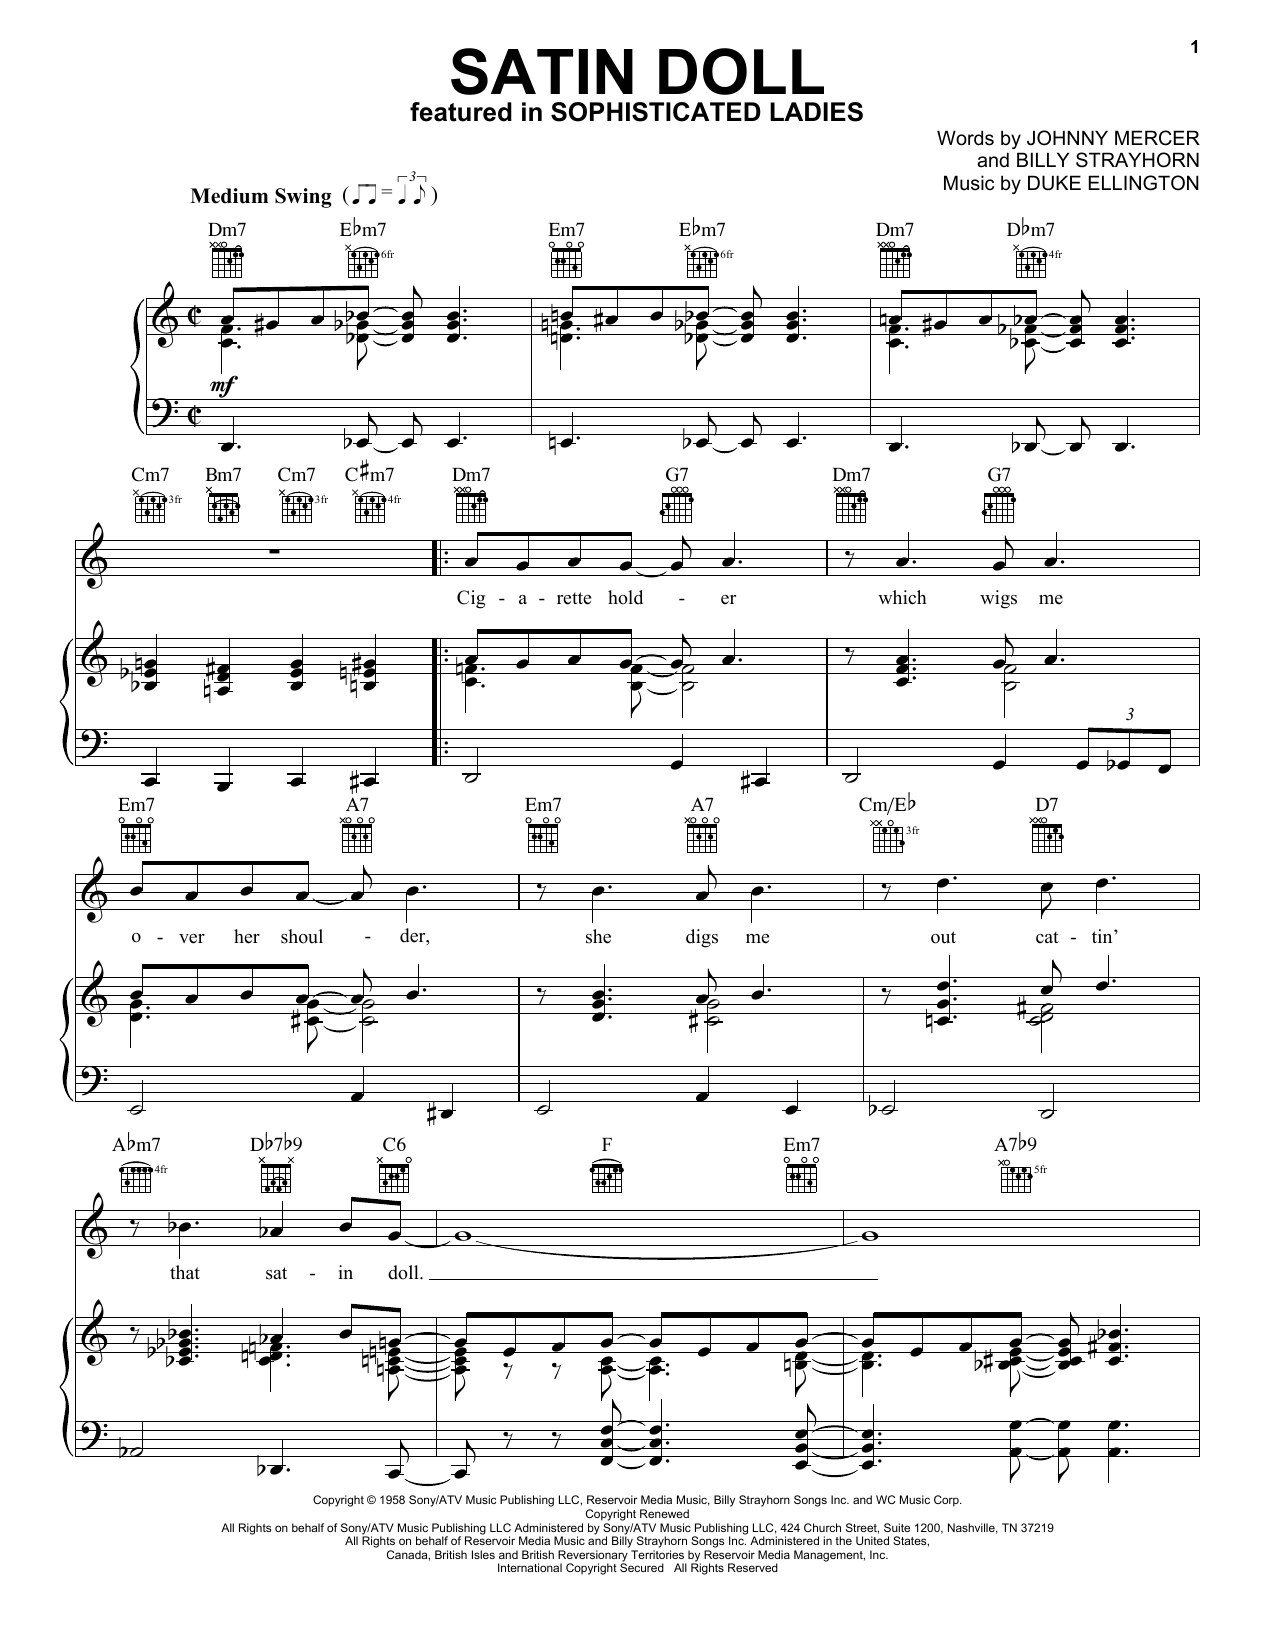 Duke Ellington Satin Doll Sheet Music Notes & Chords for Melody Line, Lyrics & Chords - Download or Print PDF